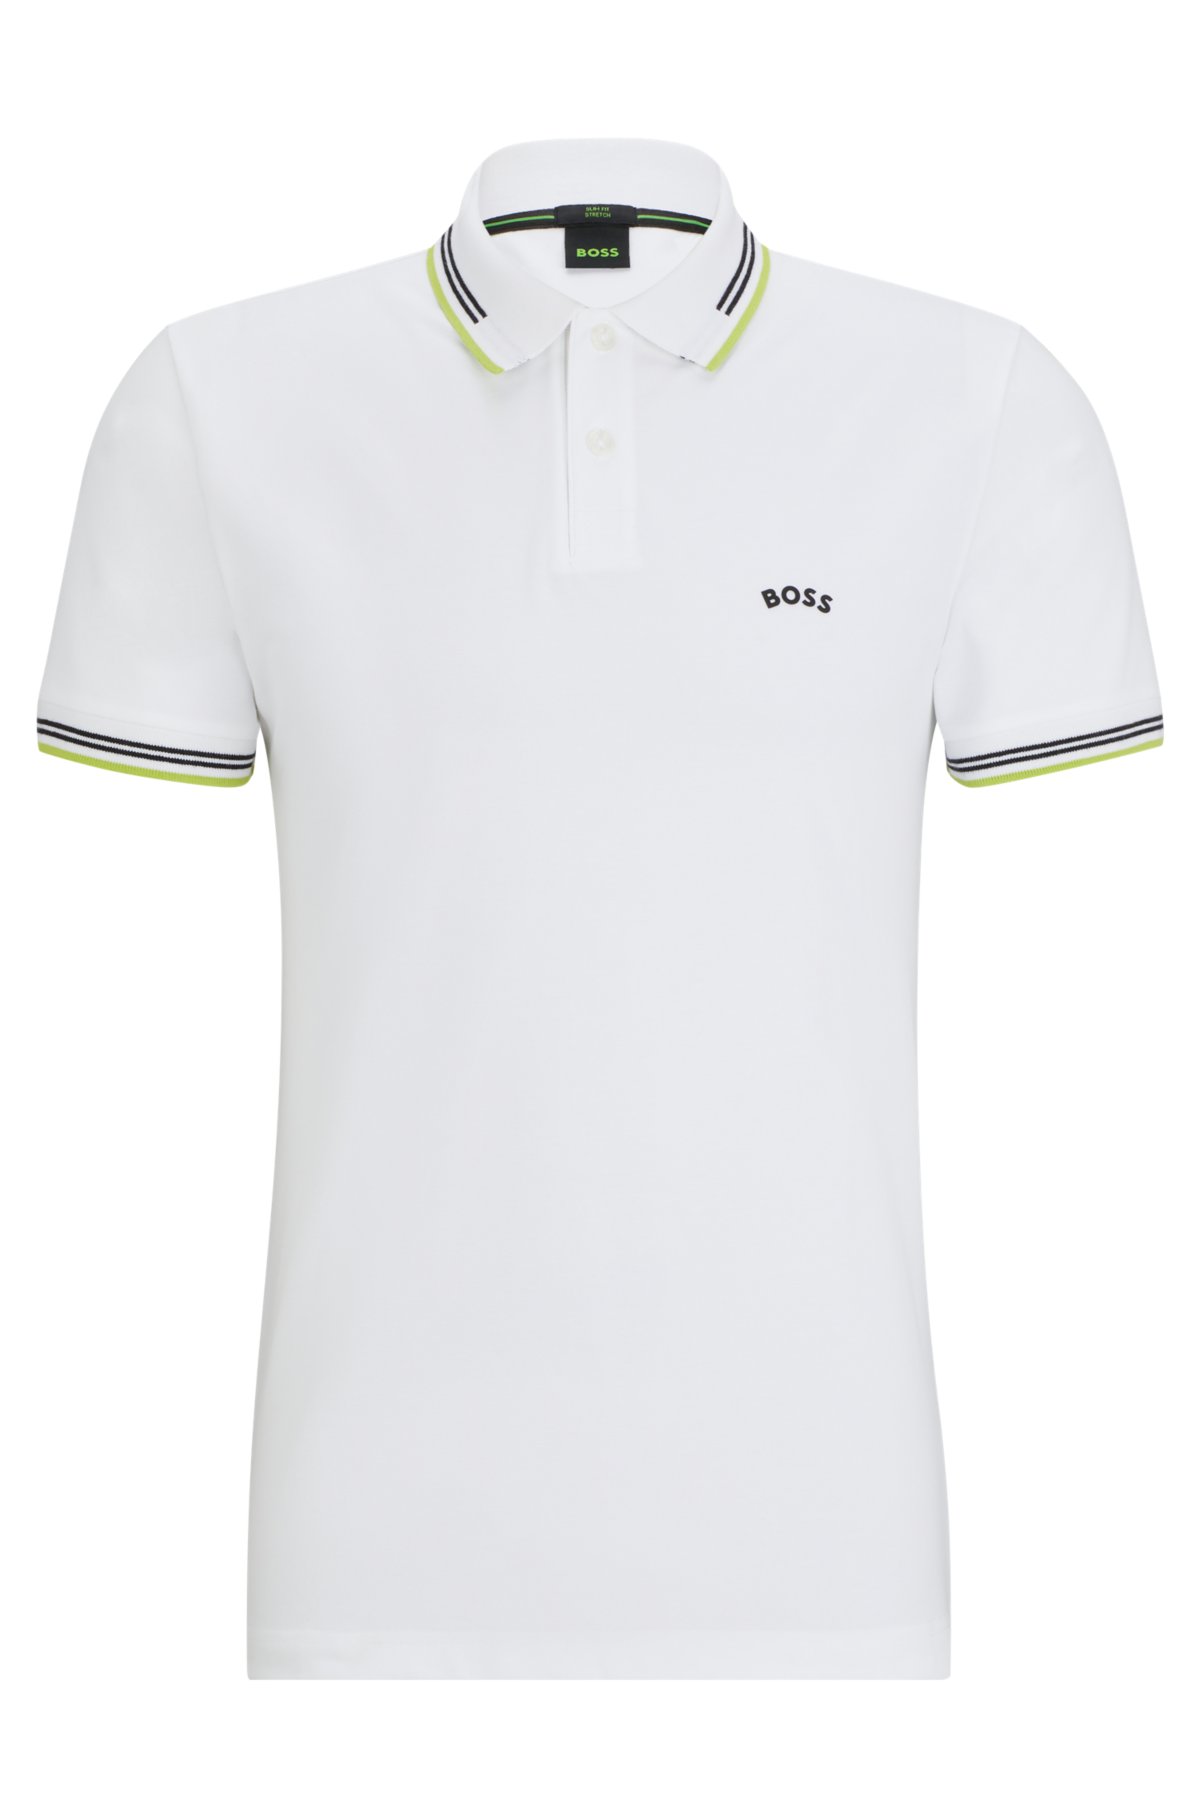 Mens Sleeveless Polo Shirts Casual Sports Slim Fit Button Golf Shirt